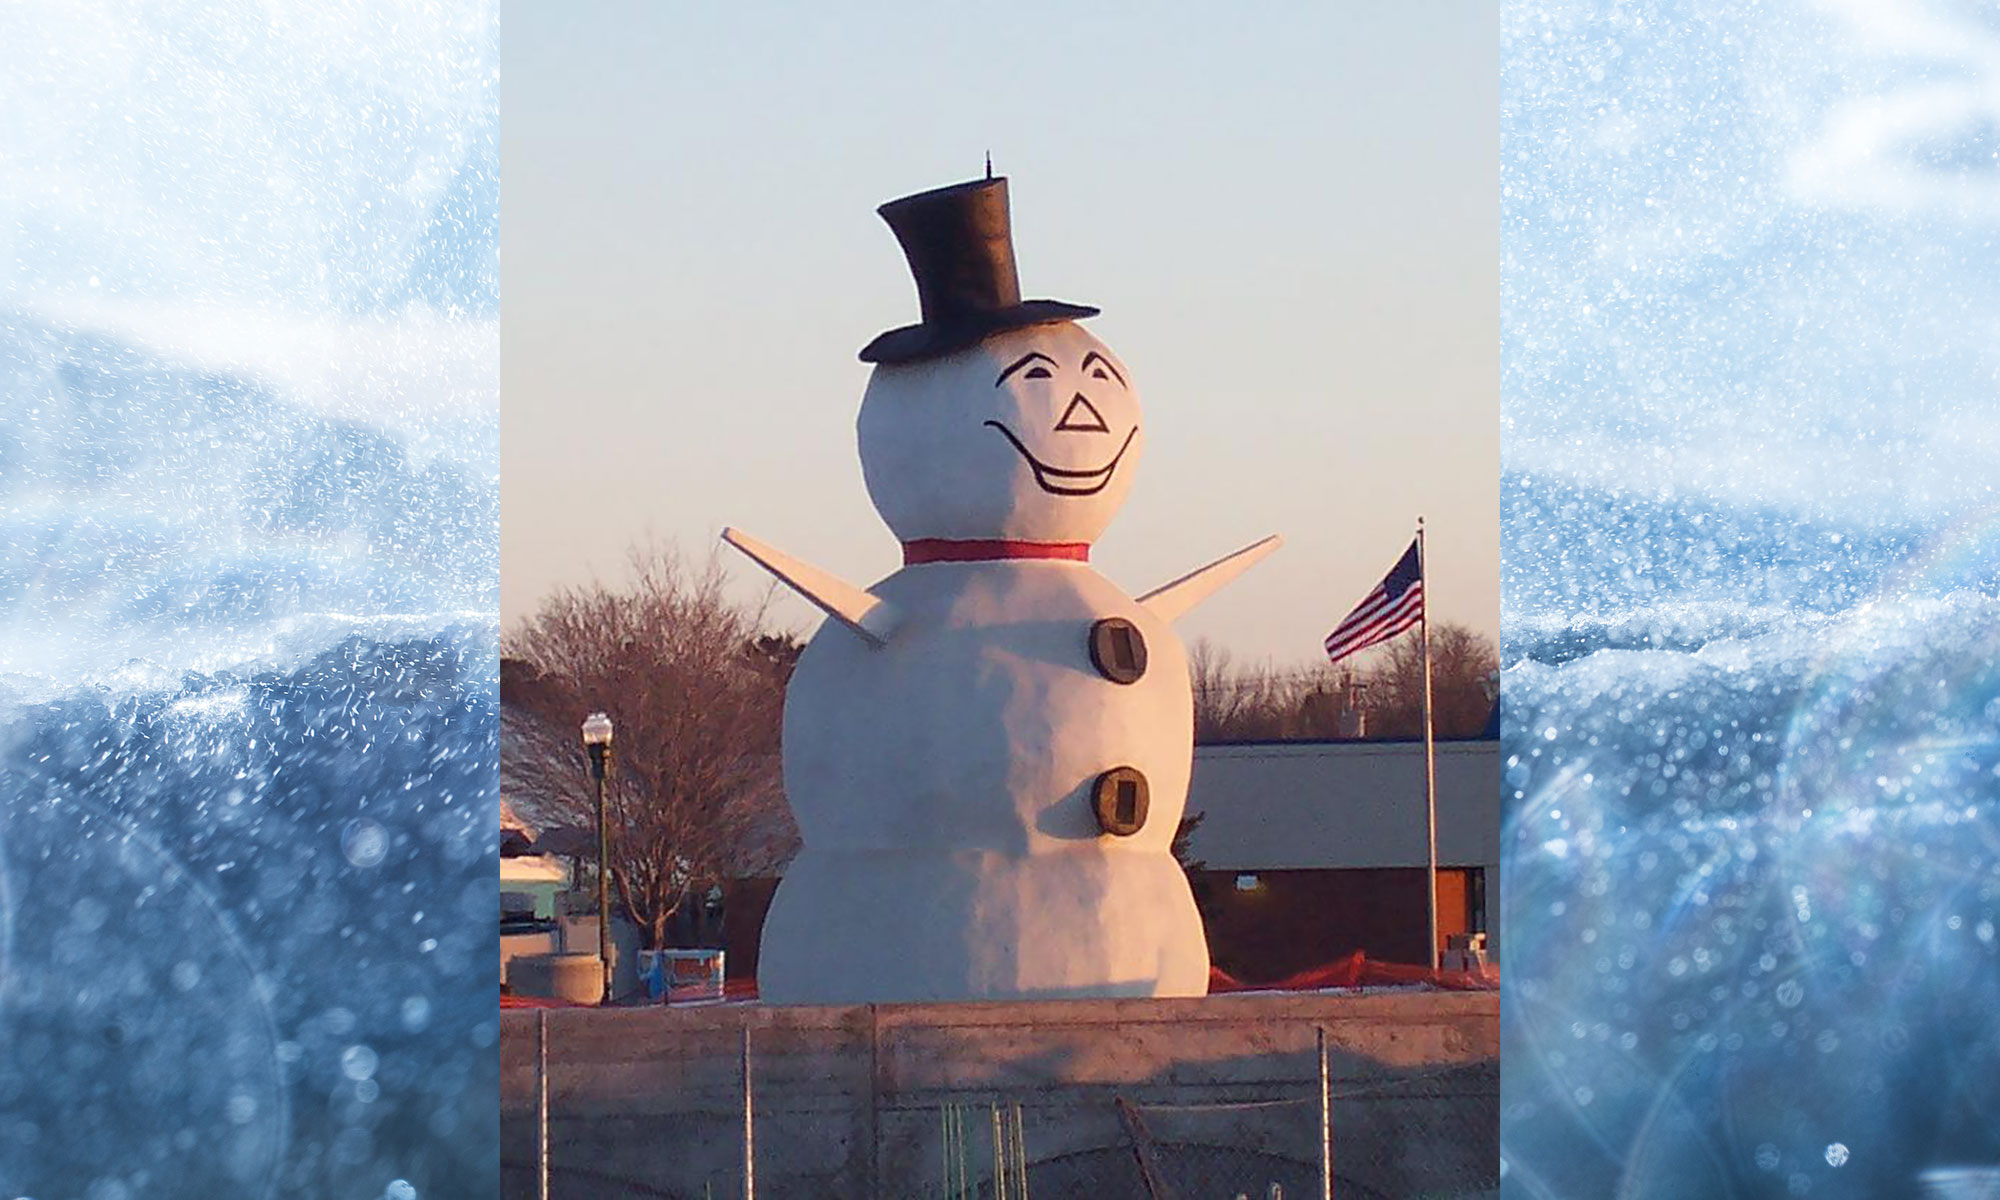 Giant snowman in parking lot